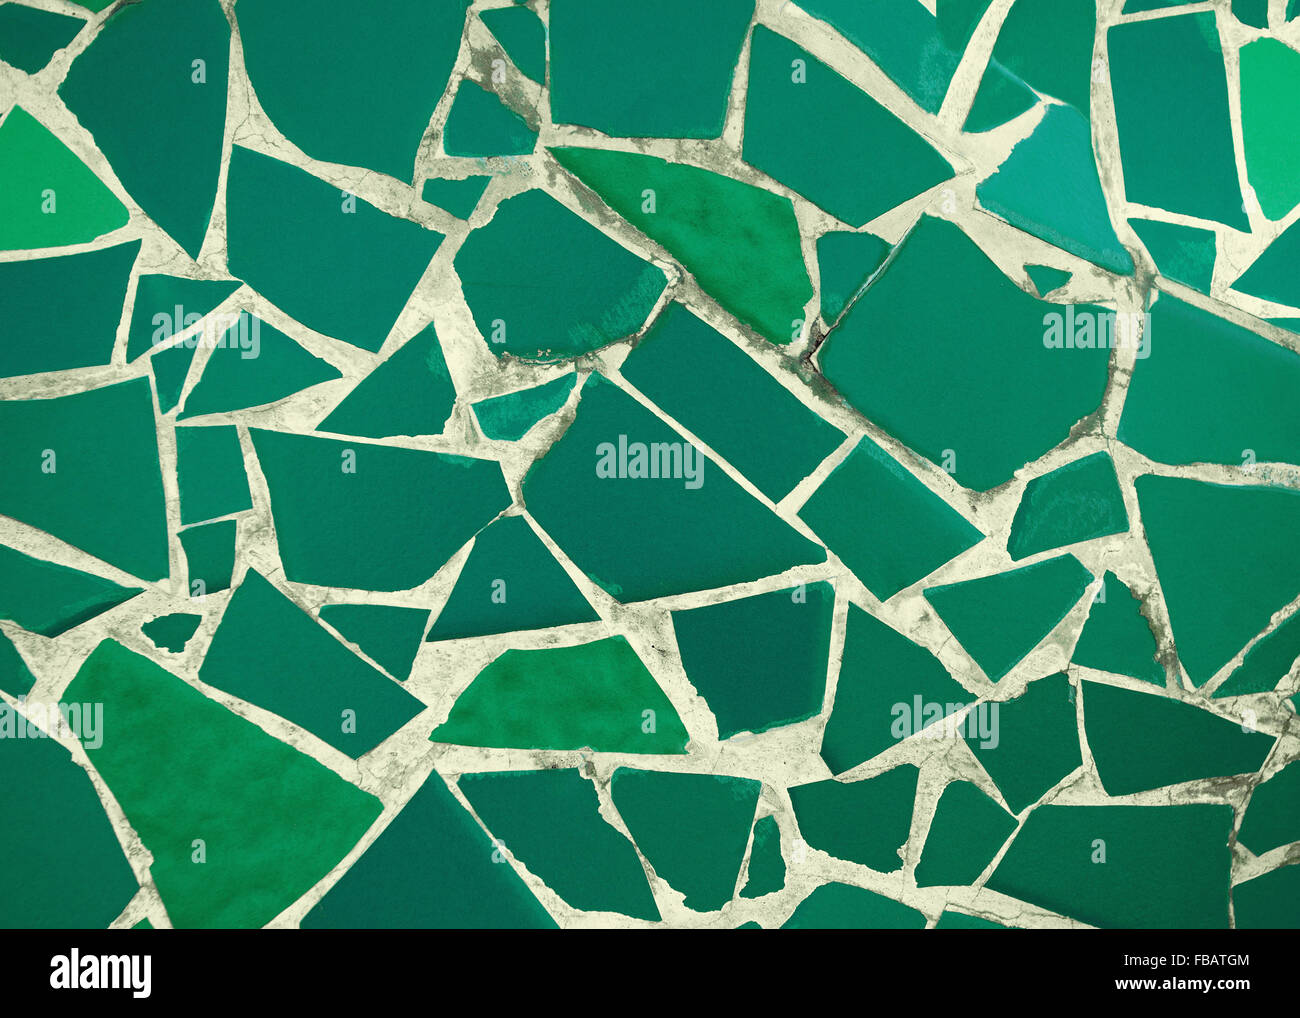 Grunge green broken tiles background Stock Photo